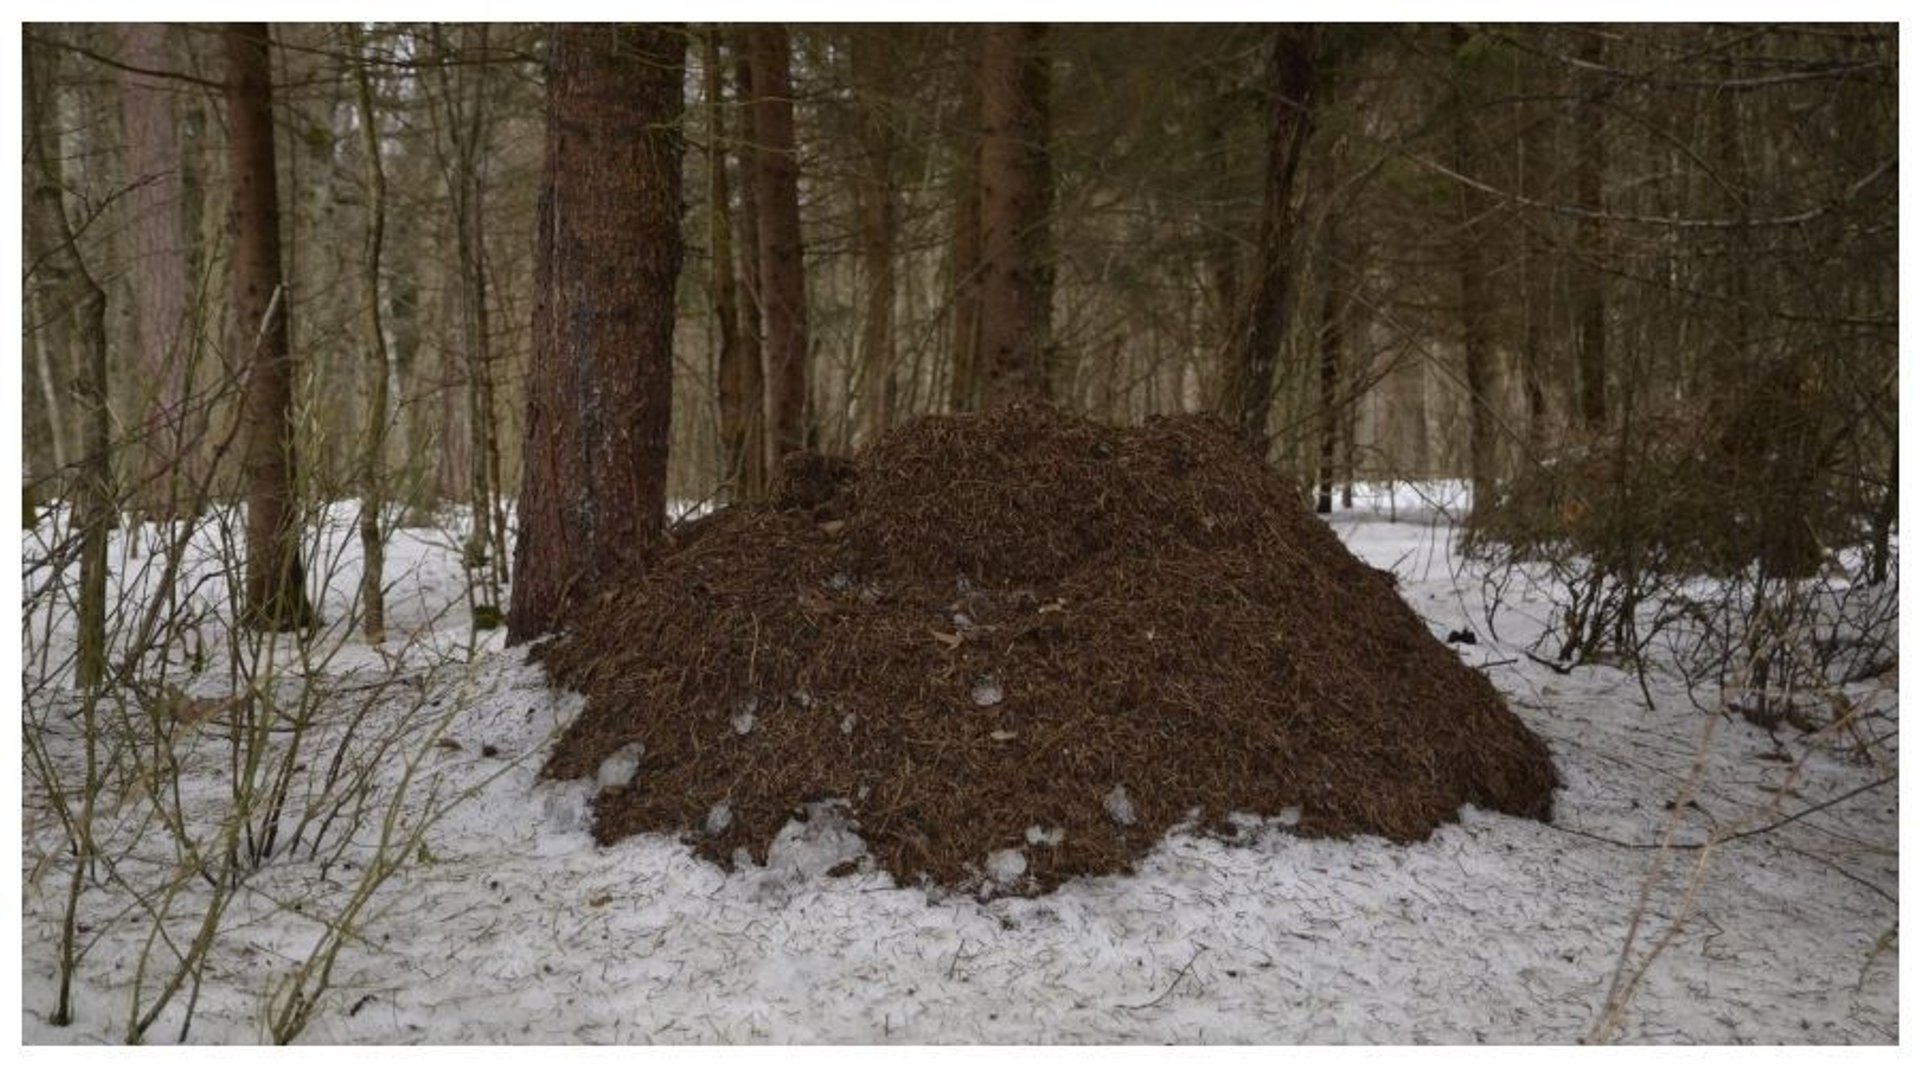 Zdjęcie kopca mrówek